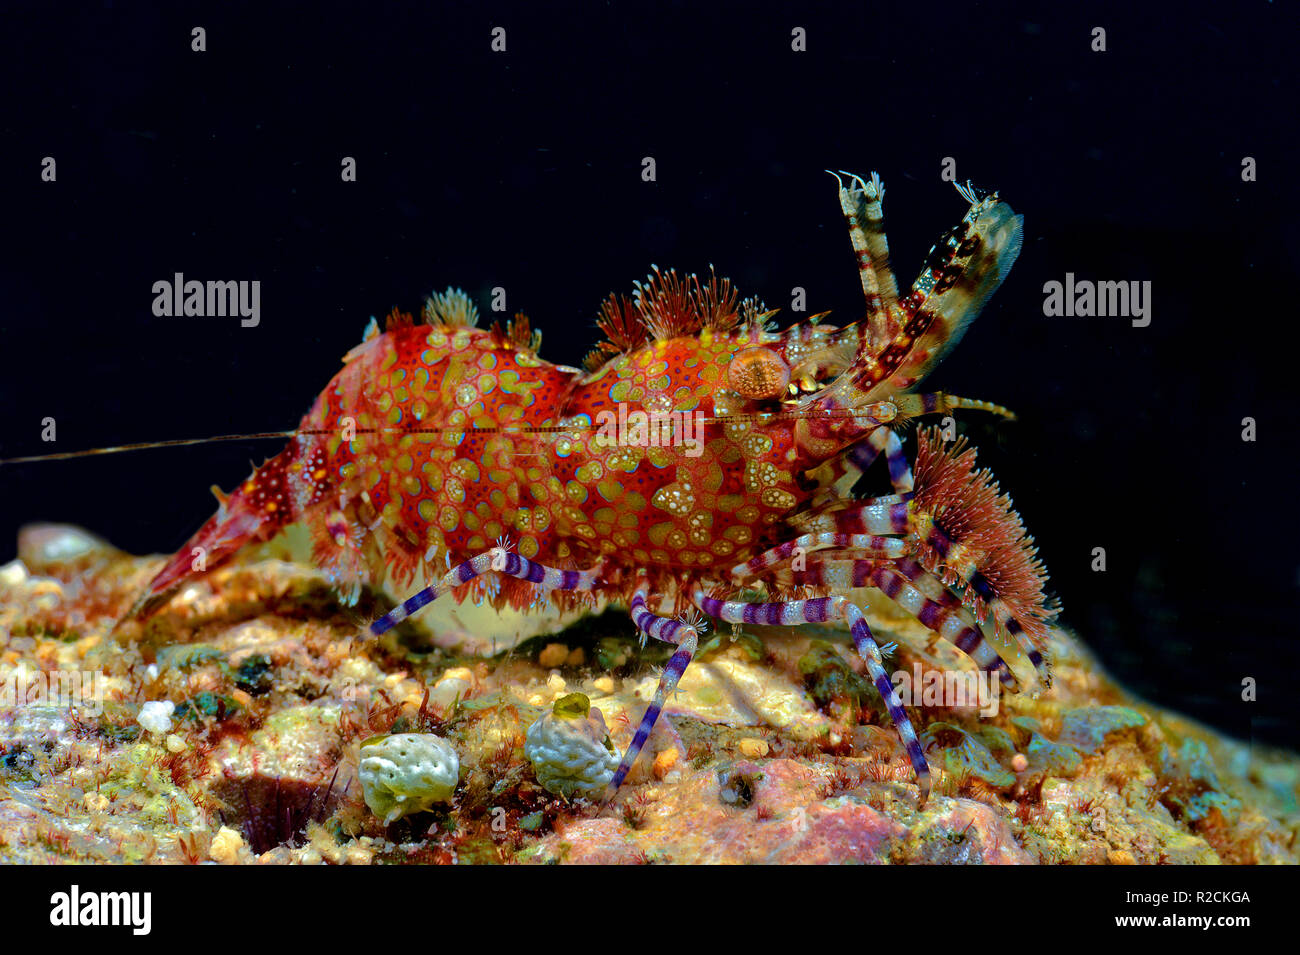 Marble shrimp (Saron marmoratus), Witu island, West New Britain, Papua New Guinea, Pacific Ocean Stock Photo